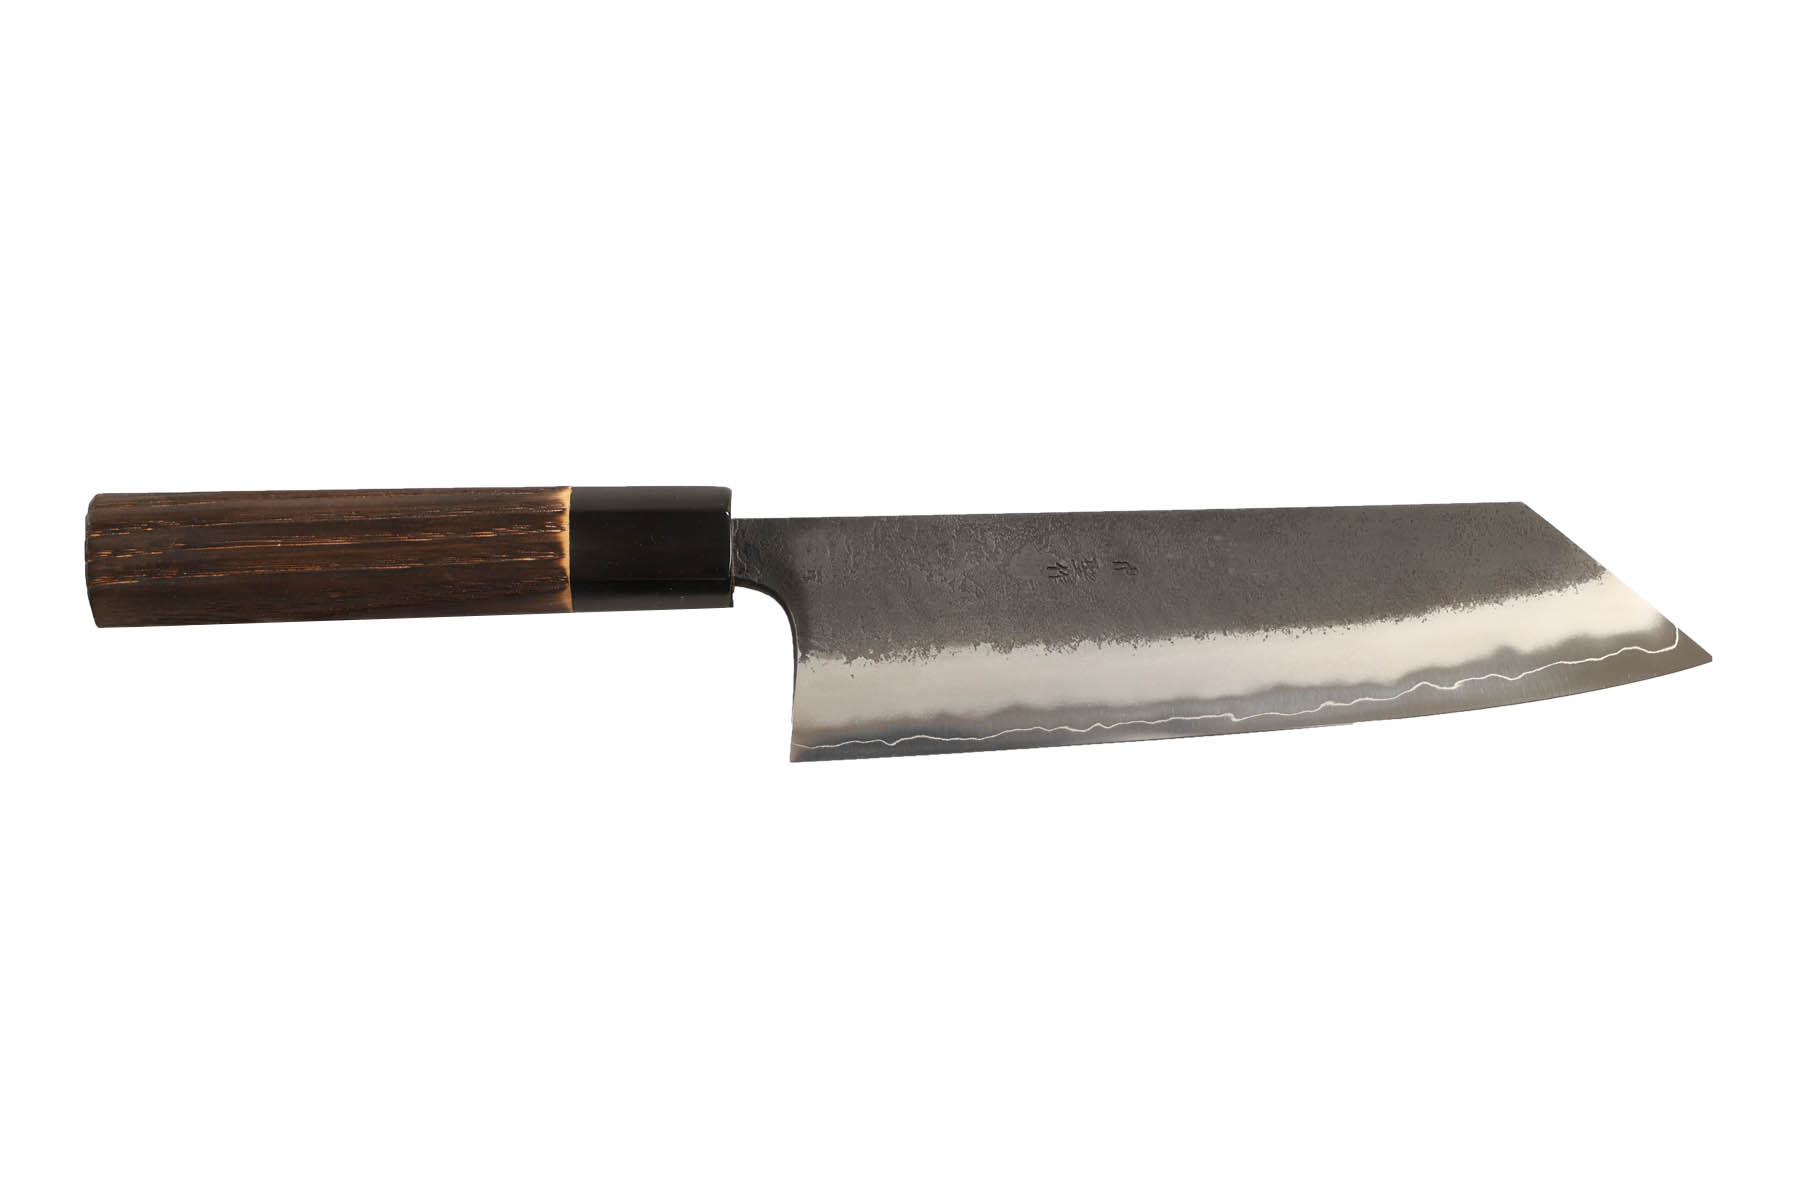 Couteau japonais artisanal de Masashi Yamamoto - Couteau kiritsuke 20 cm